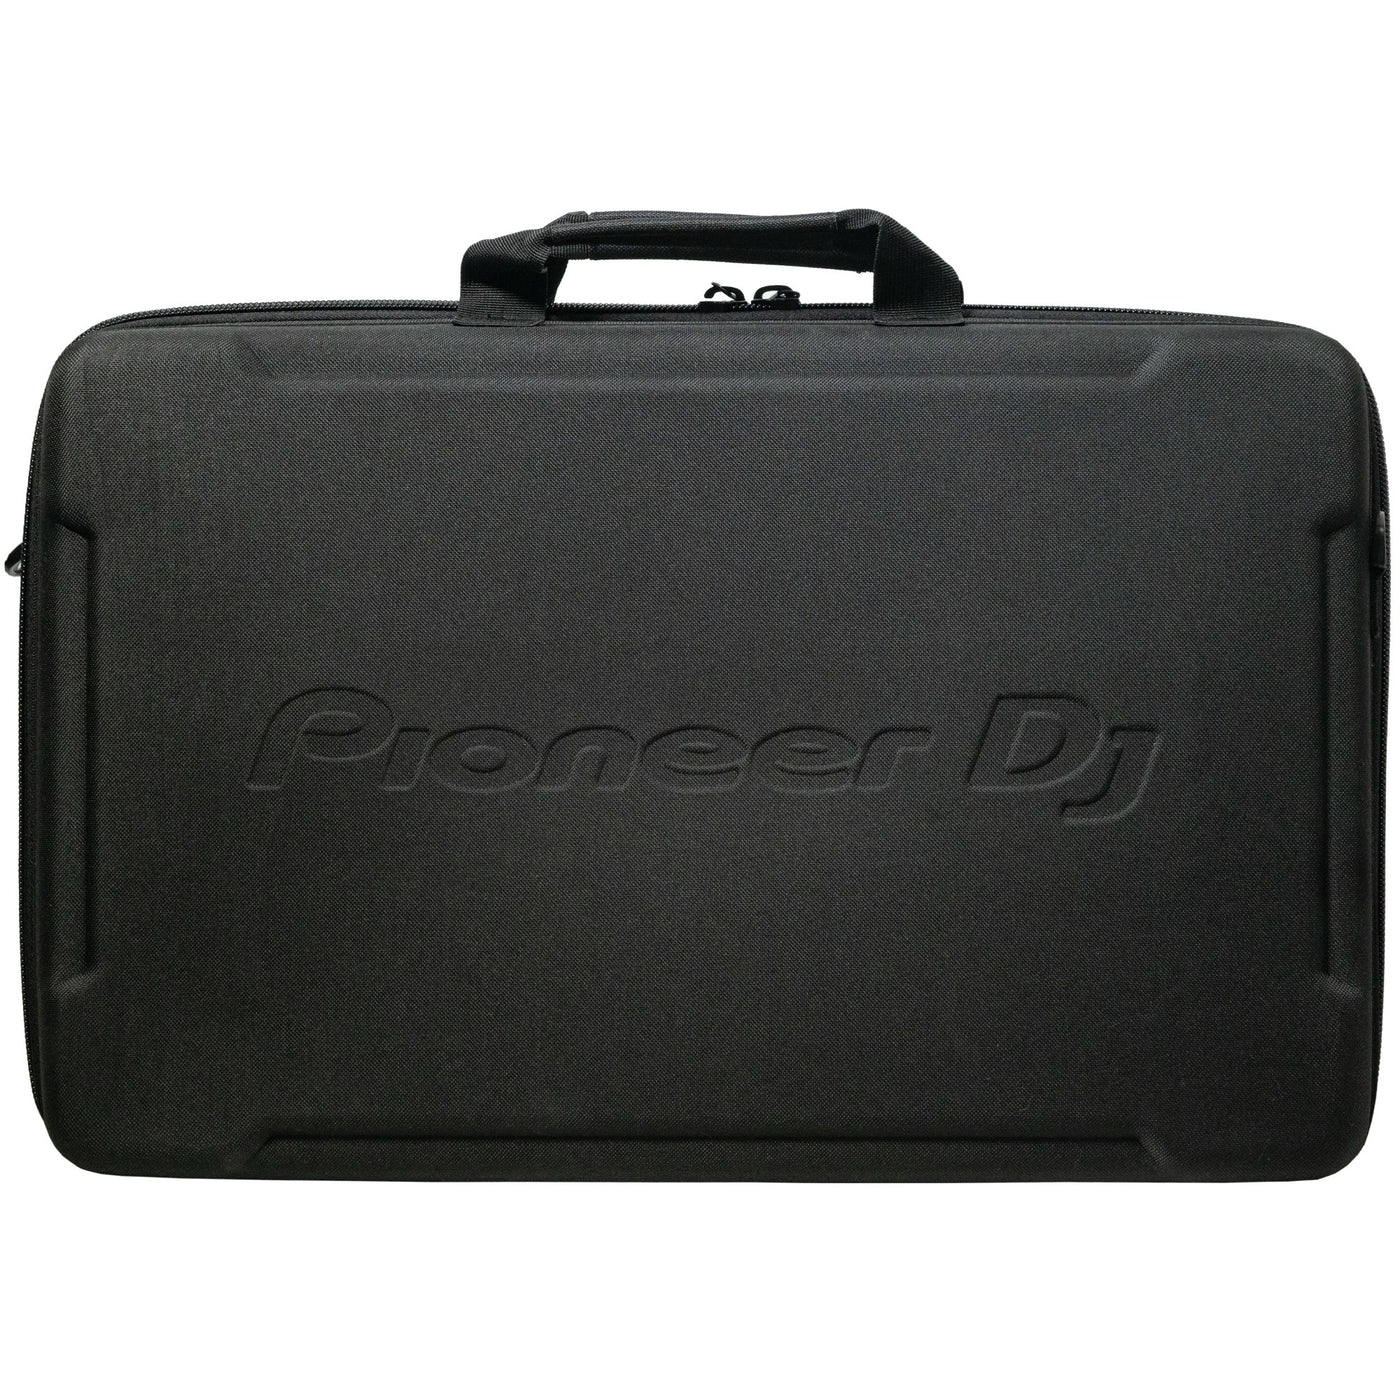 Pioneer DJ DJC-B1 Controller Bag for DDJ-400 and DDJ-SB3, Storage for Professional Audio DJ Equipment